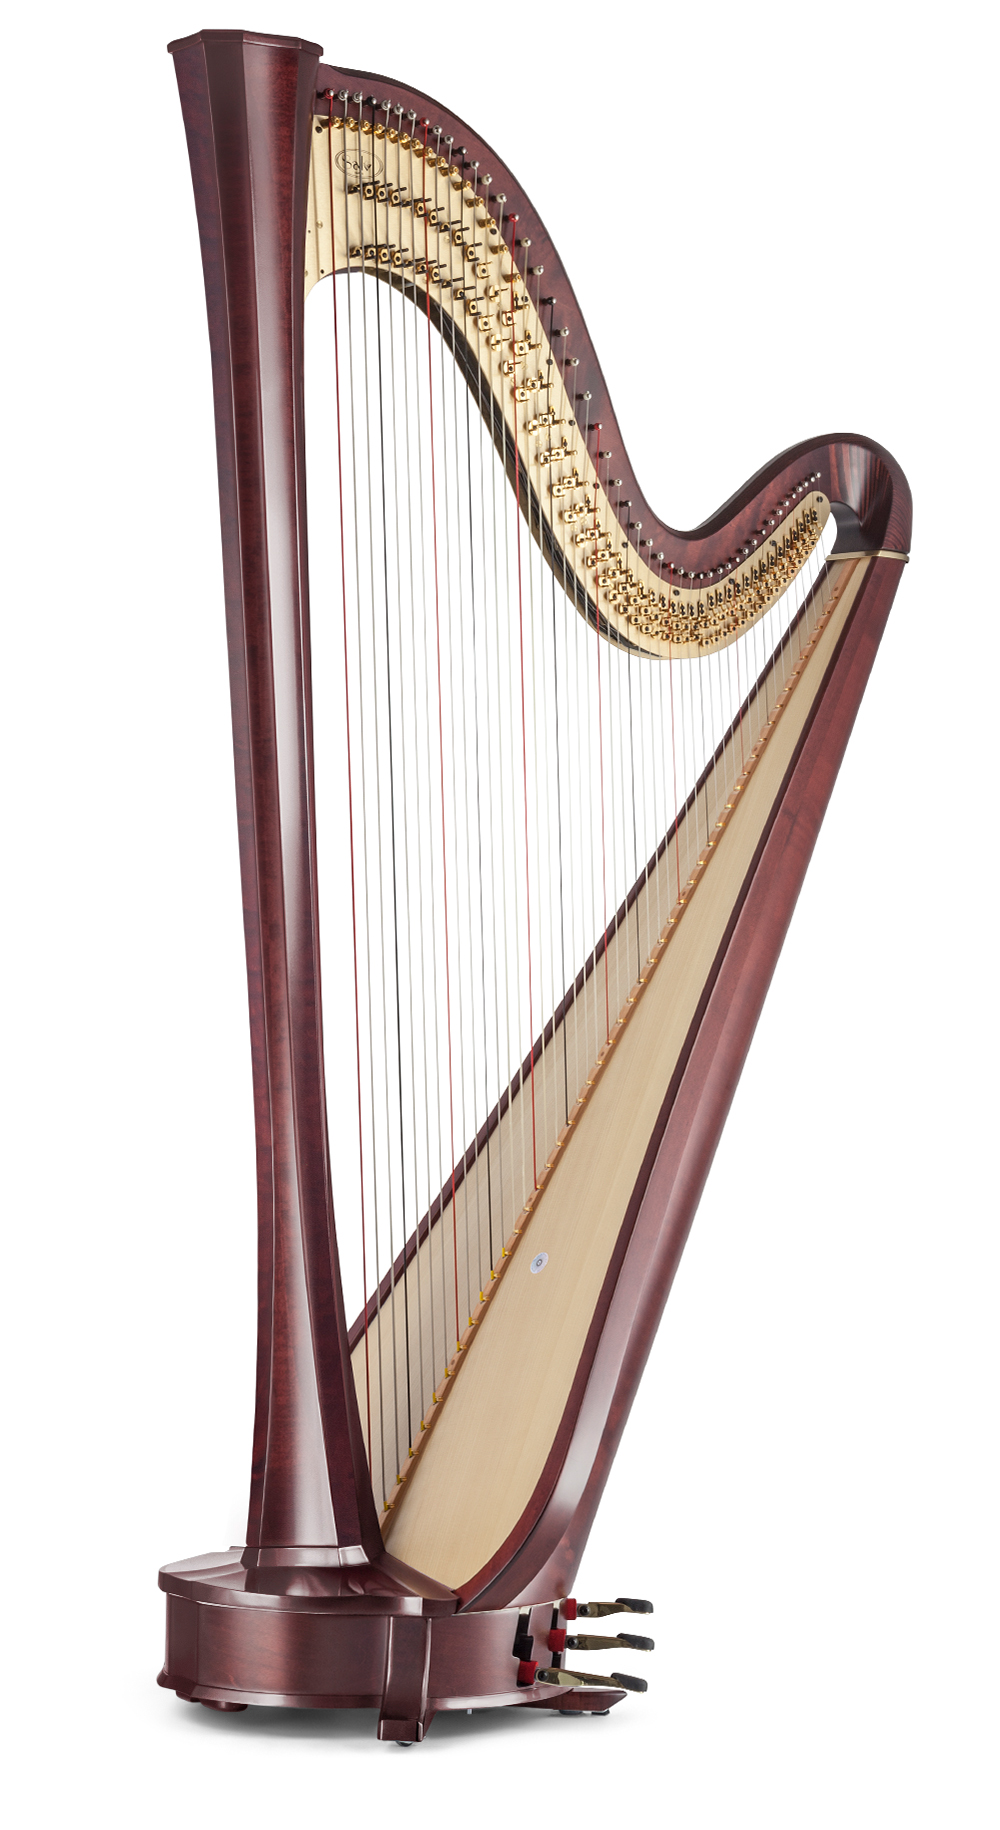 Bild der Harfe Electra CG